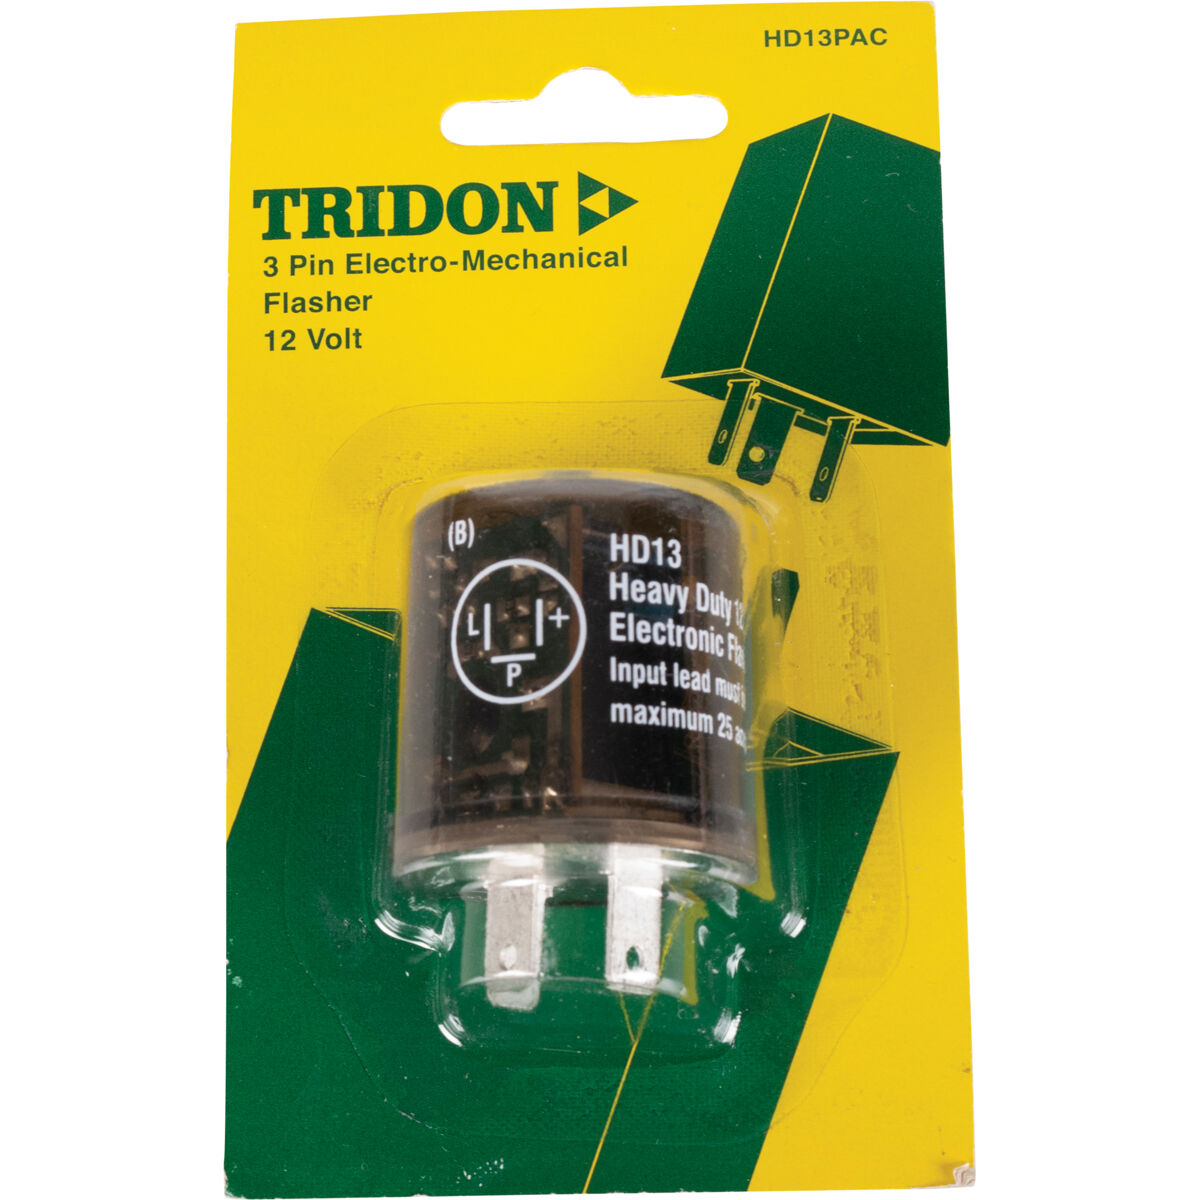 Tridon Flasher - 12V 3 Pin, Non-Load Sensitive - HD13PAC, , scaau_hi-res